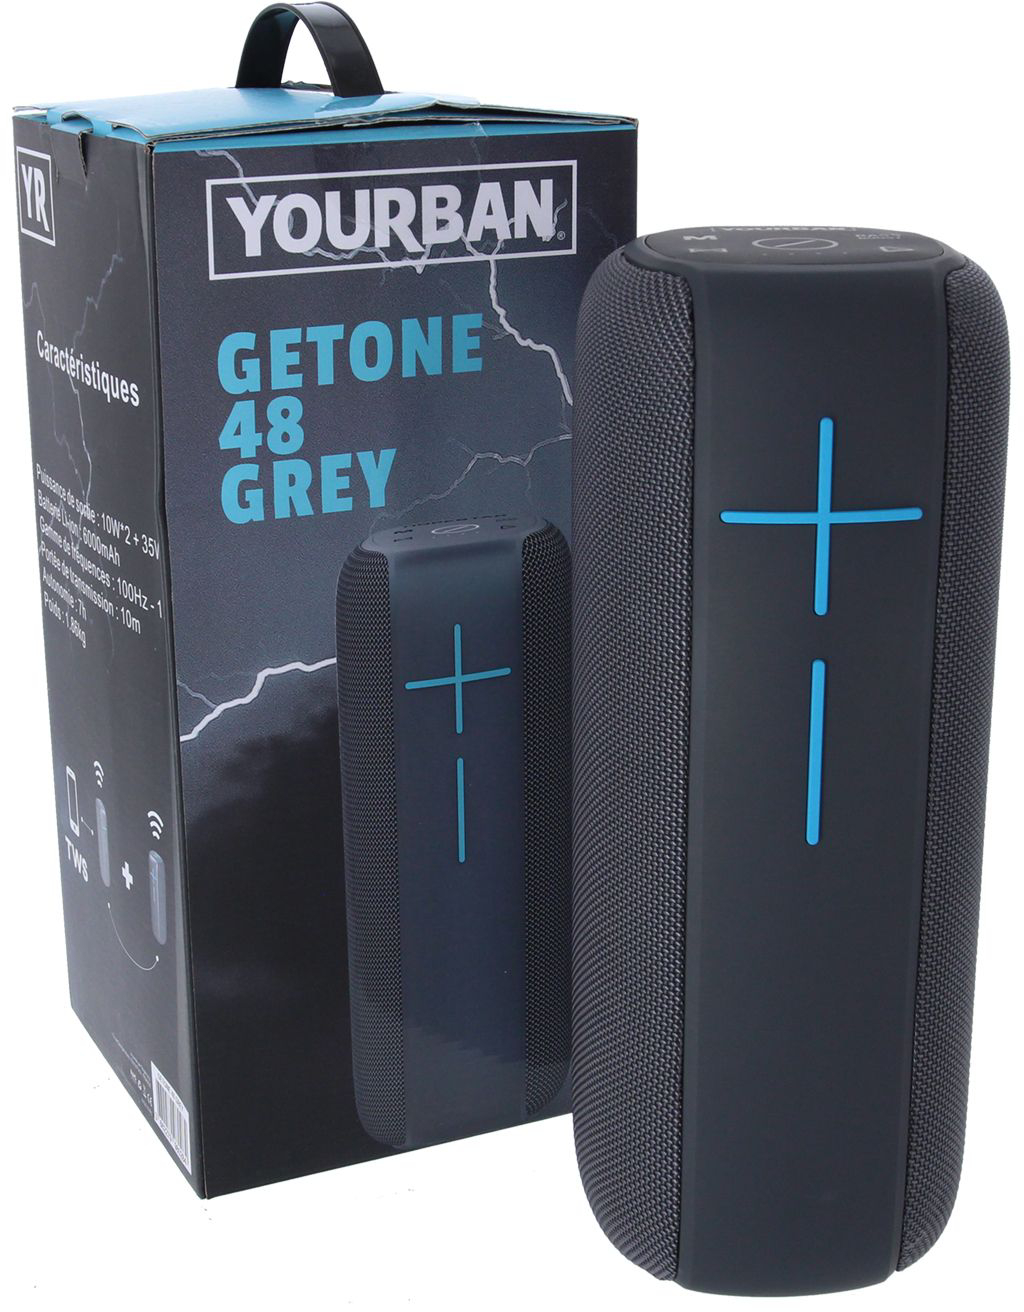 Yourban Getone 48 Grey - Mobiele PA- systeem - Variation 5